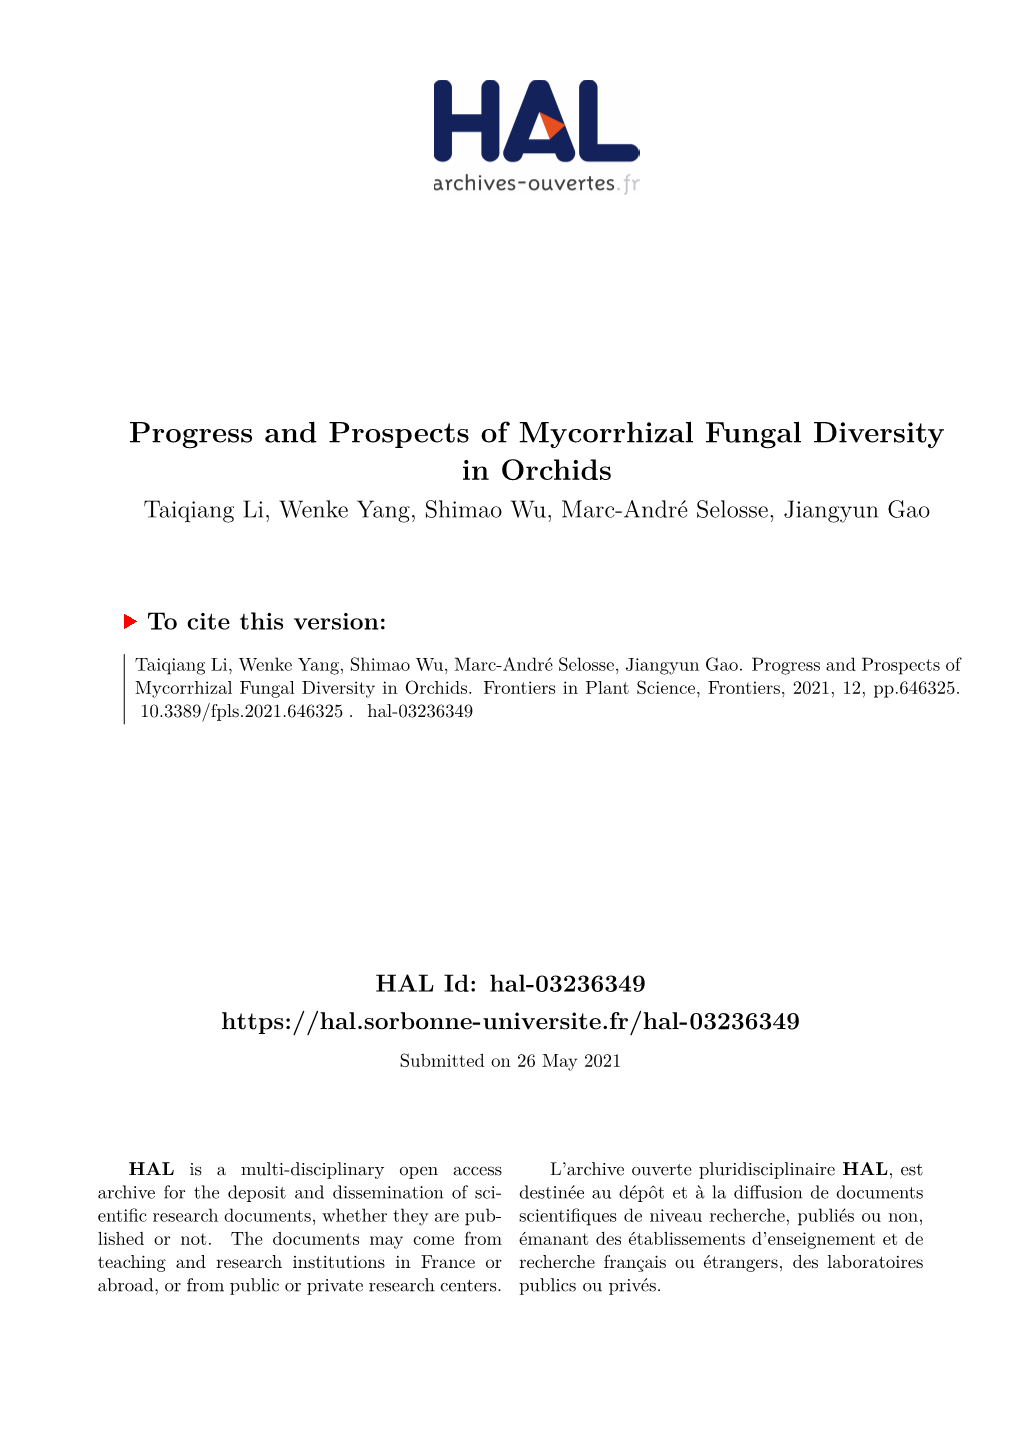 Progress and Prospects of Mycorrhizal Fungal Diversity in Orchids Taiqiang Li, Wenke Yang, Shimao Wu, Marc-André Selosse, Jiangyun Gao